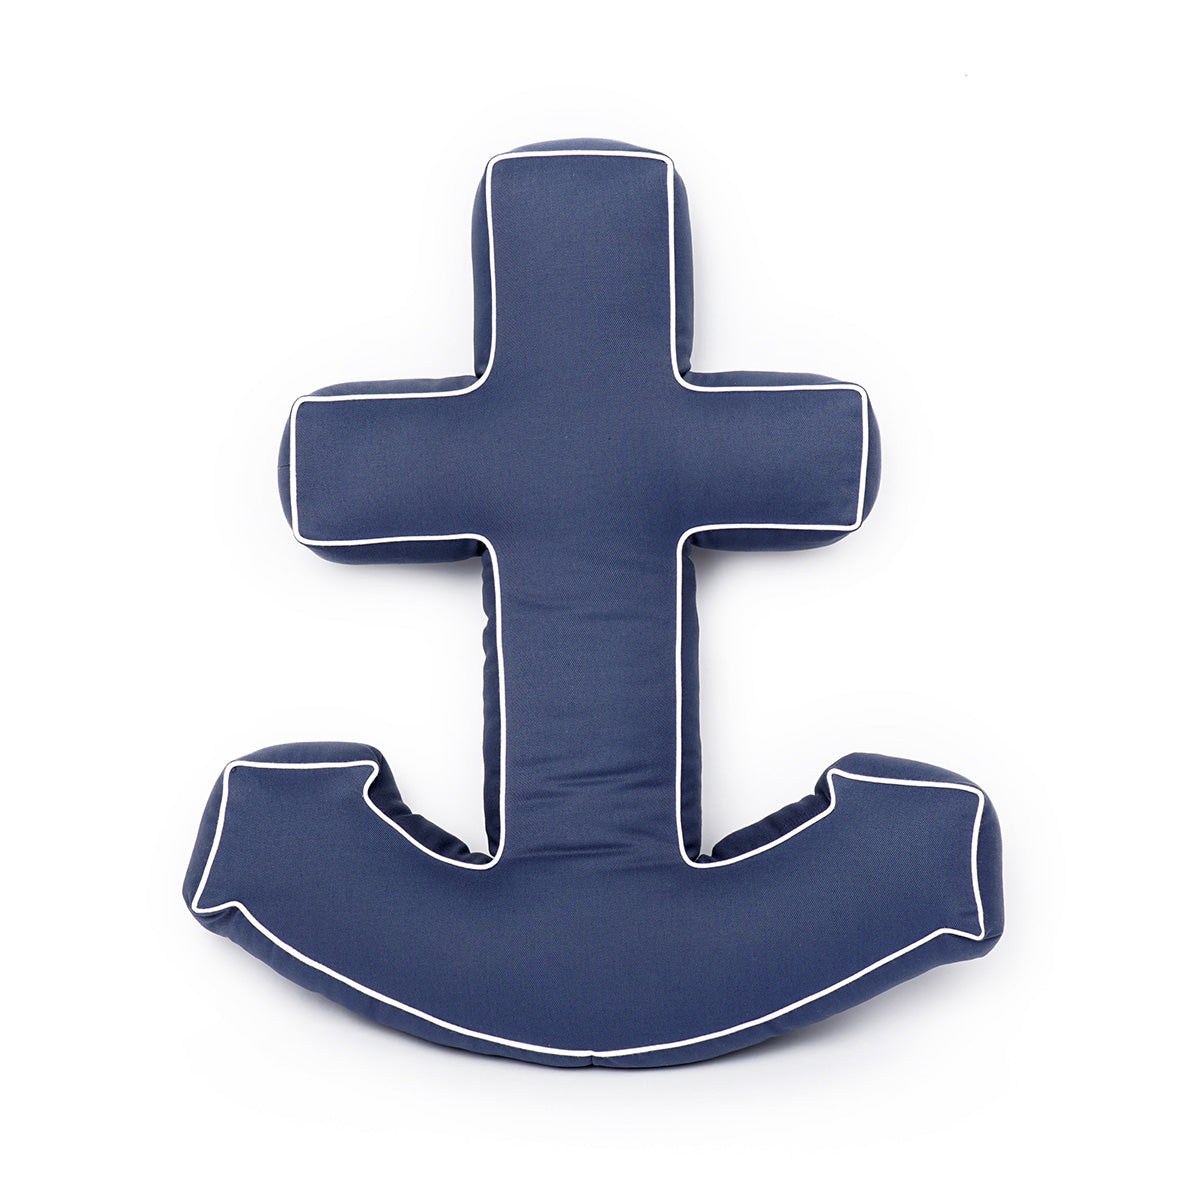 Anchor Cushion Navy | Anchor Shaped Cushion Navy